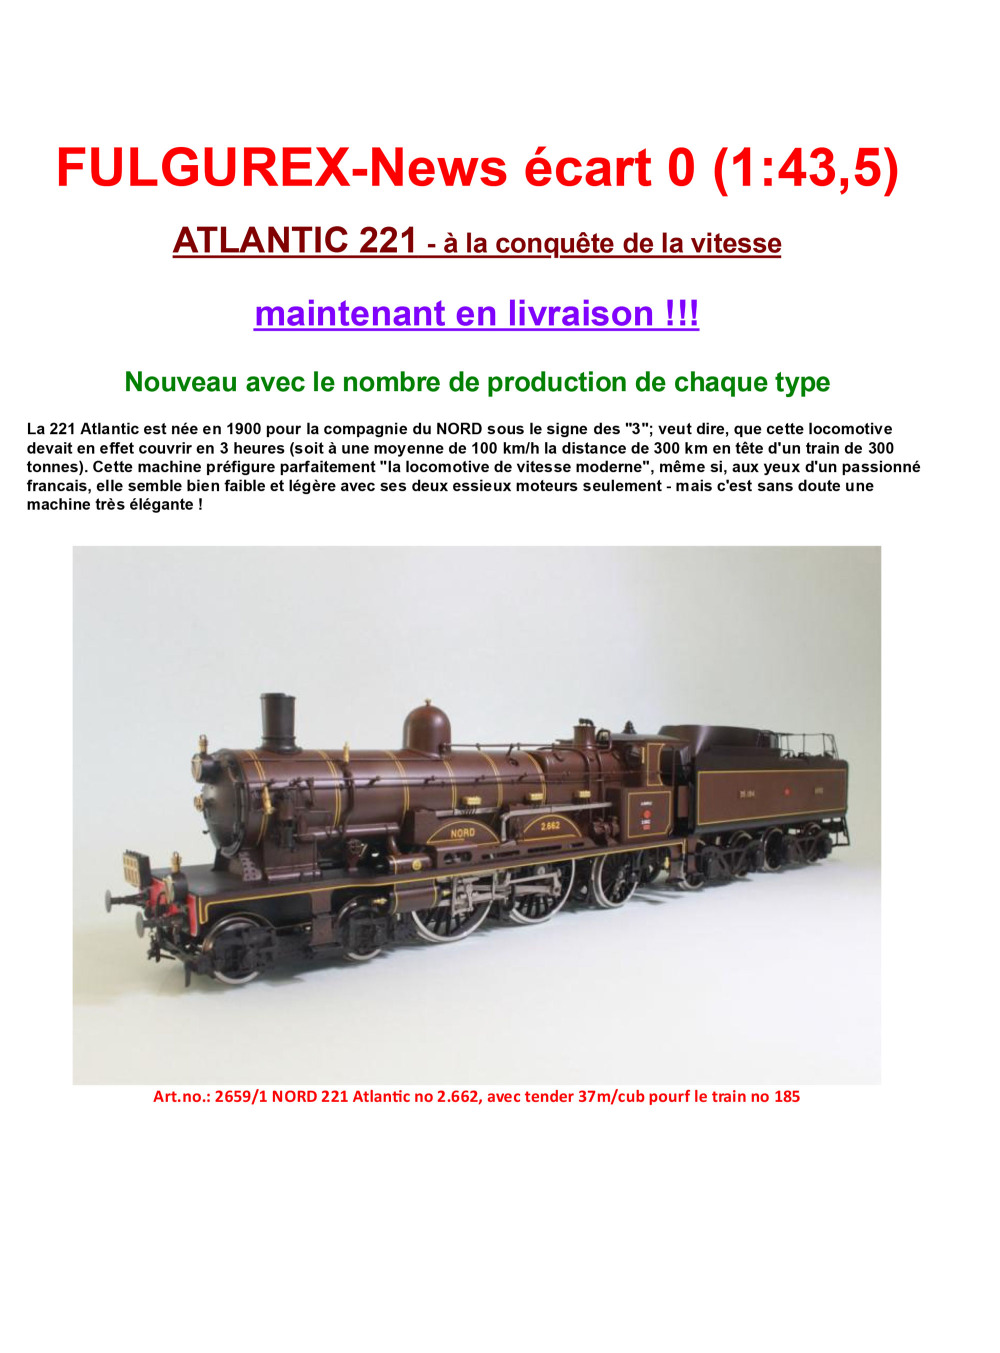 Fulgurex - Atlantic 221 steam locomotive